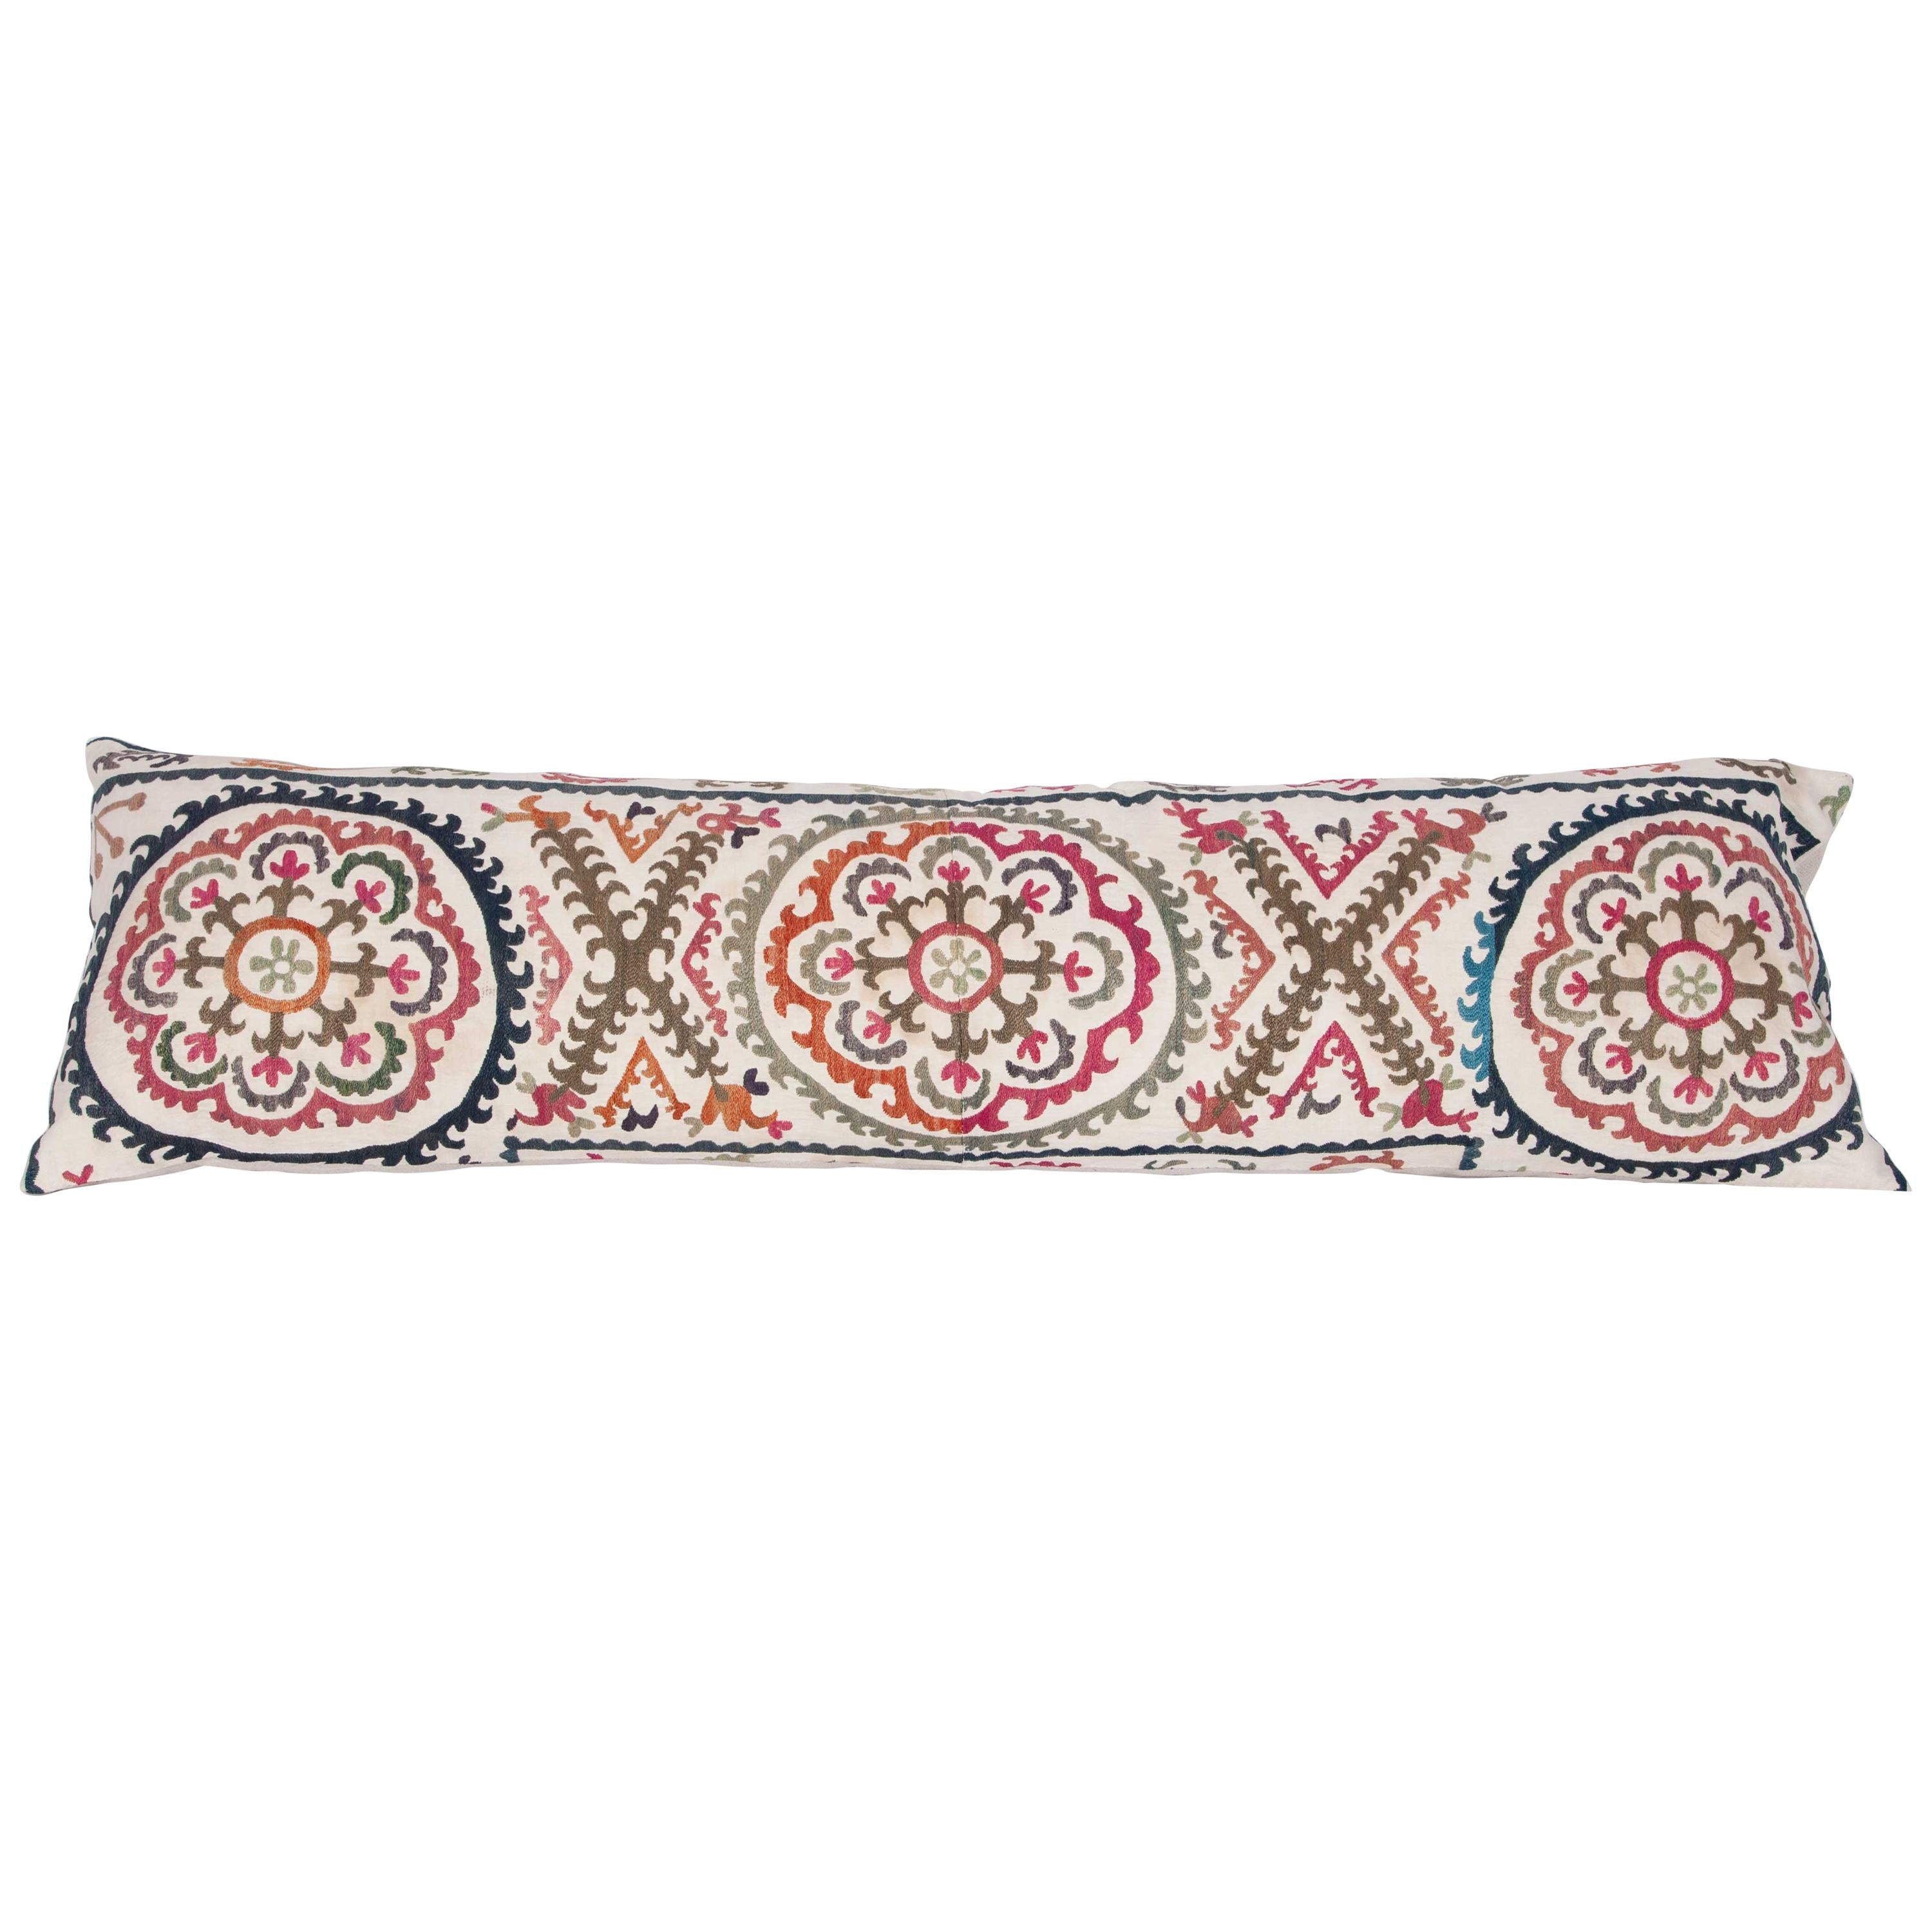 Lumbar Pillow Case Made from a Mid-20th Century, Uzbek Suzani